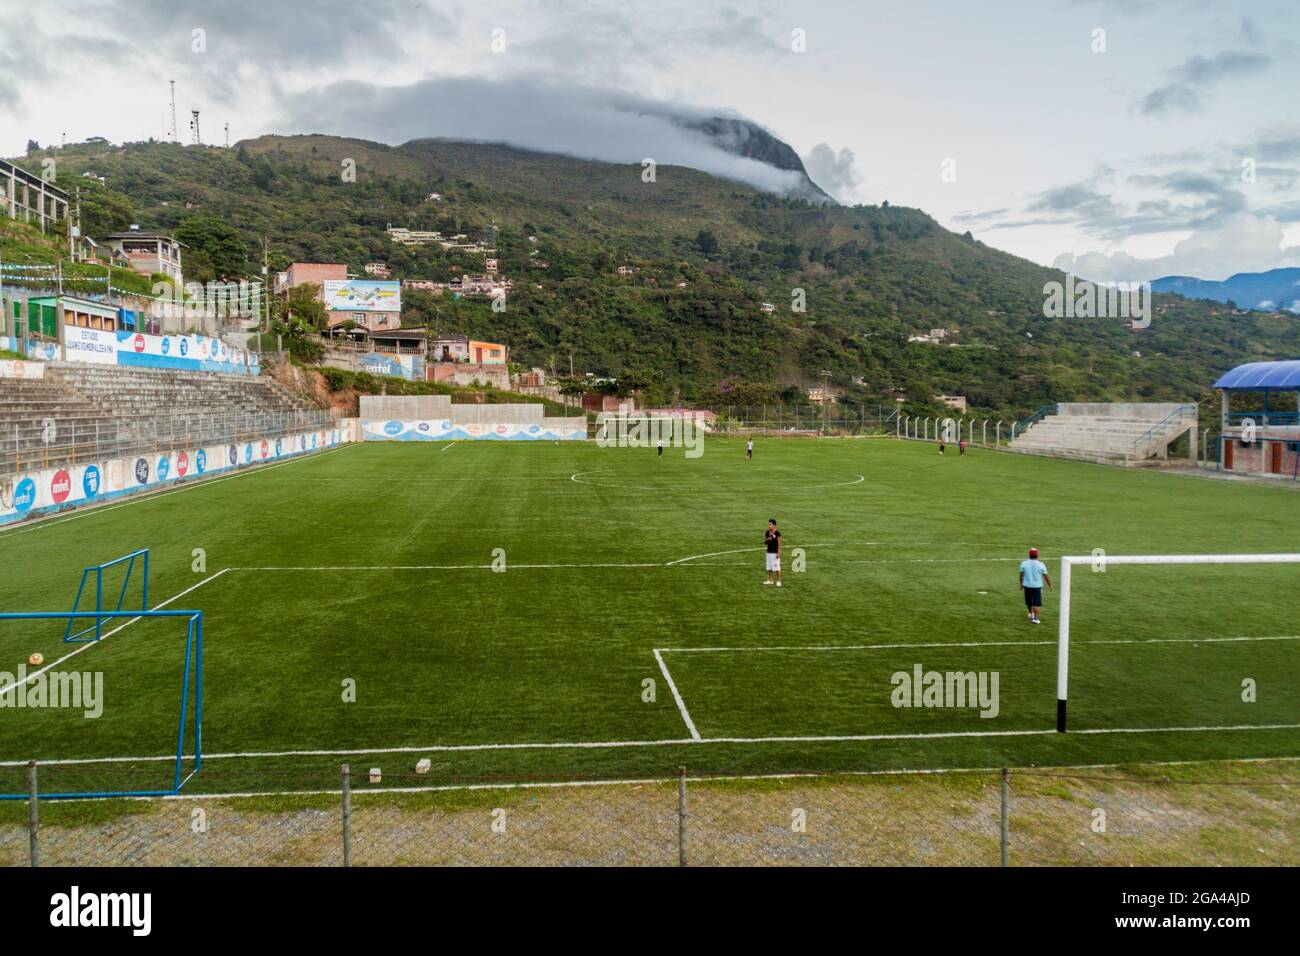 COROICO, BOLIVIA - APRIL 30, 2015: Soccer match in Coroico town, Bolivia Stock Photo